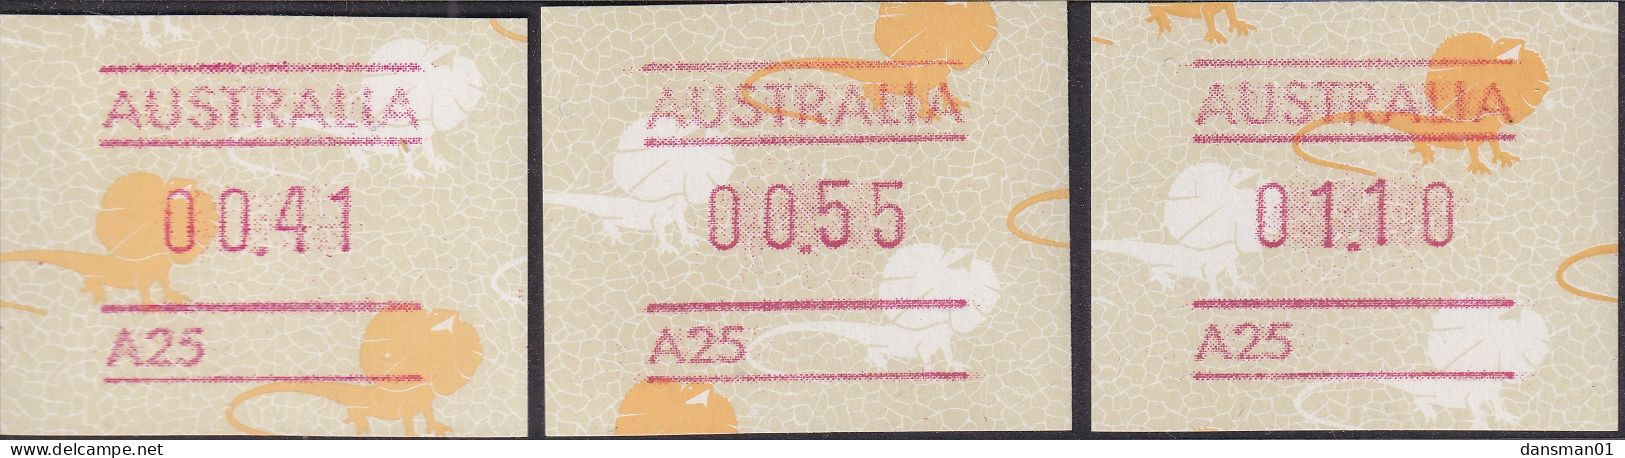 Australia 1989 Frama BUTTON SET A25 MNH - Mint Stamps